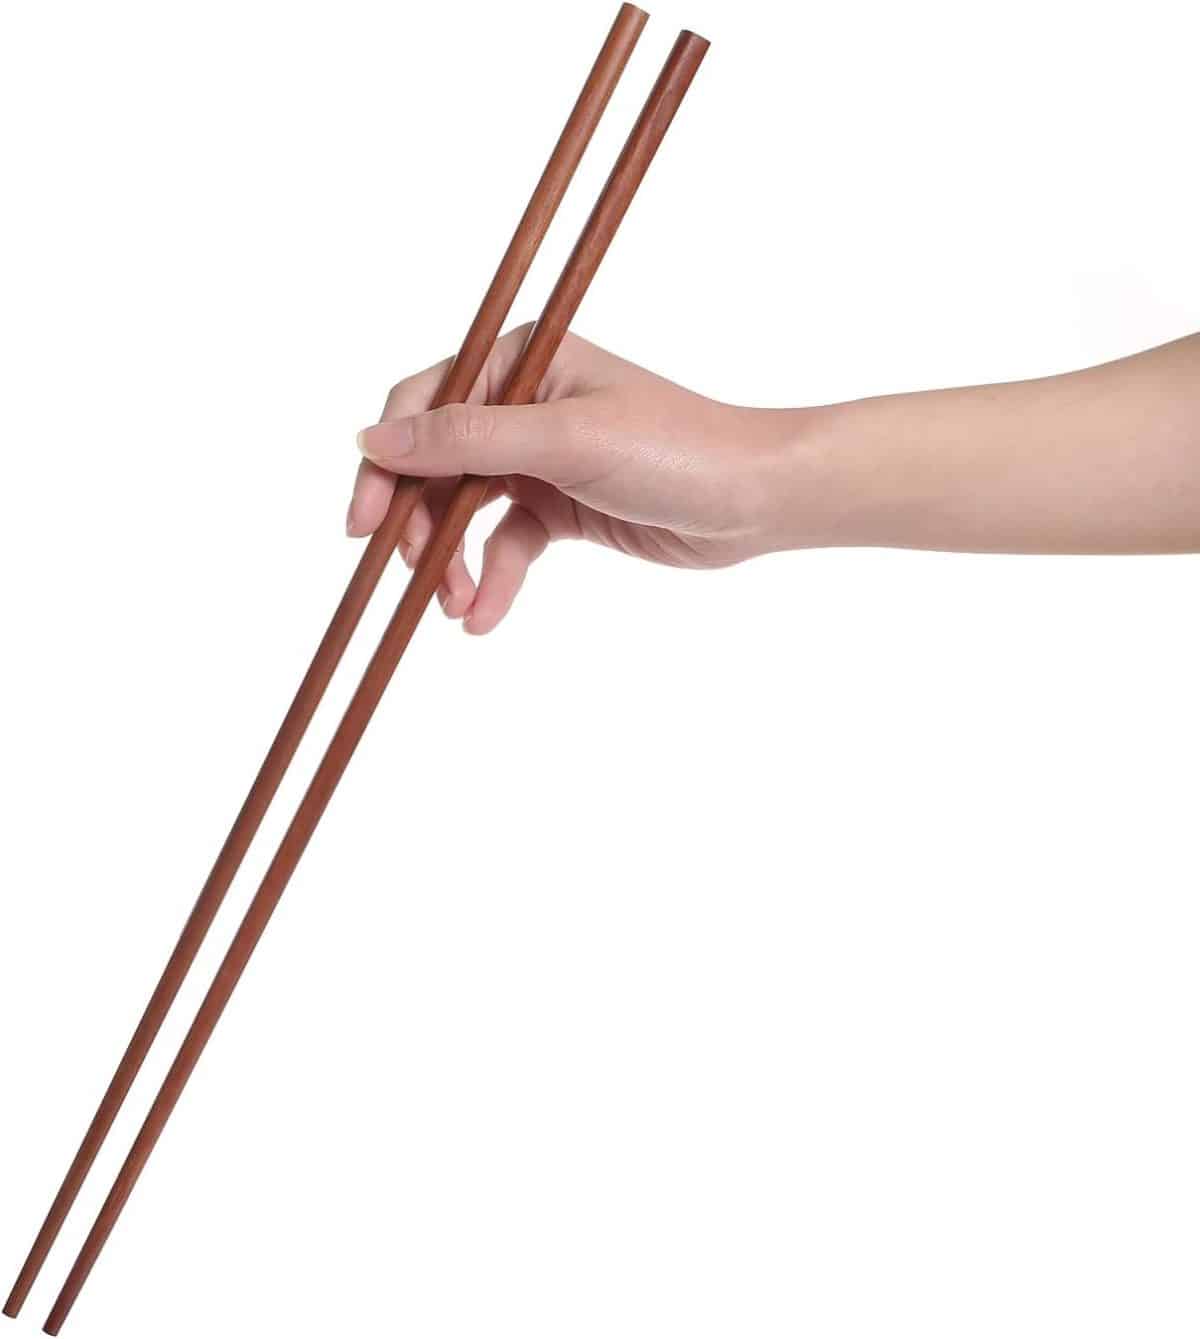 Los mejores palillos yakitori Saibashi - Palillos de cocina de madera Donxote extra largos